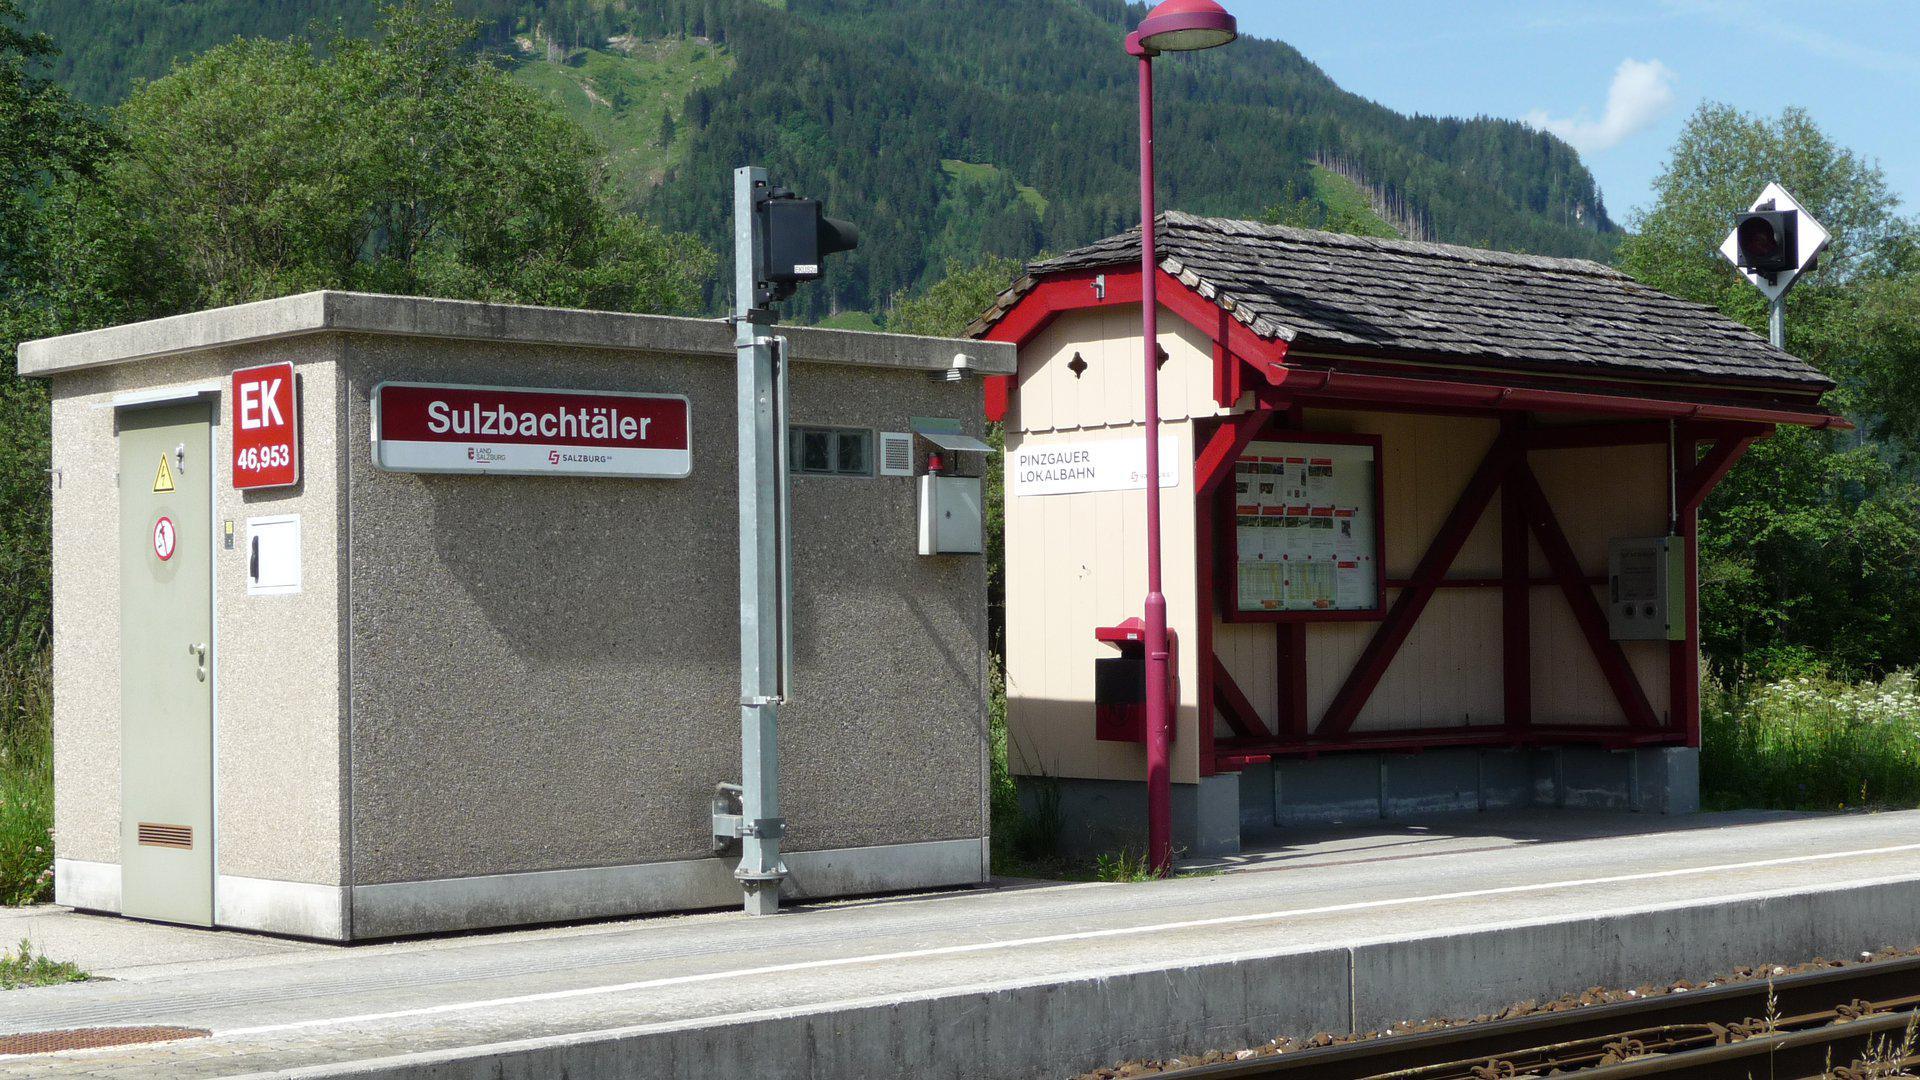 Sulzbachtäler